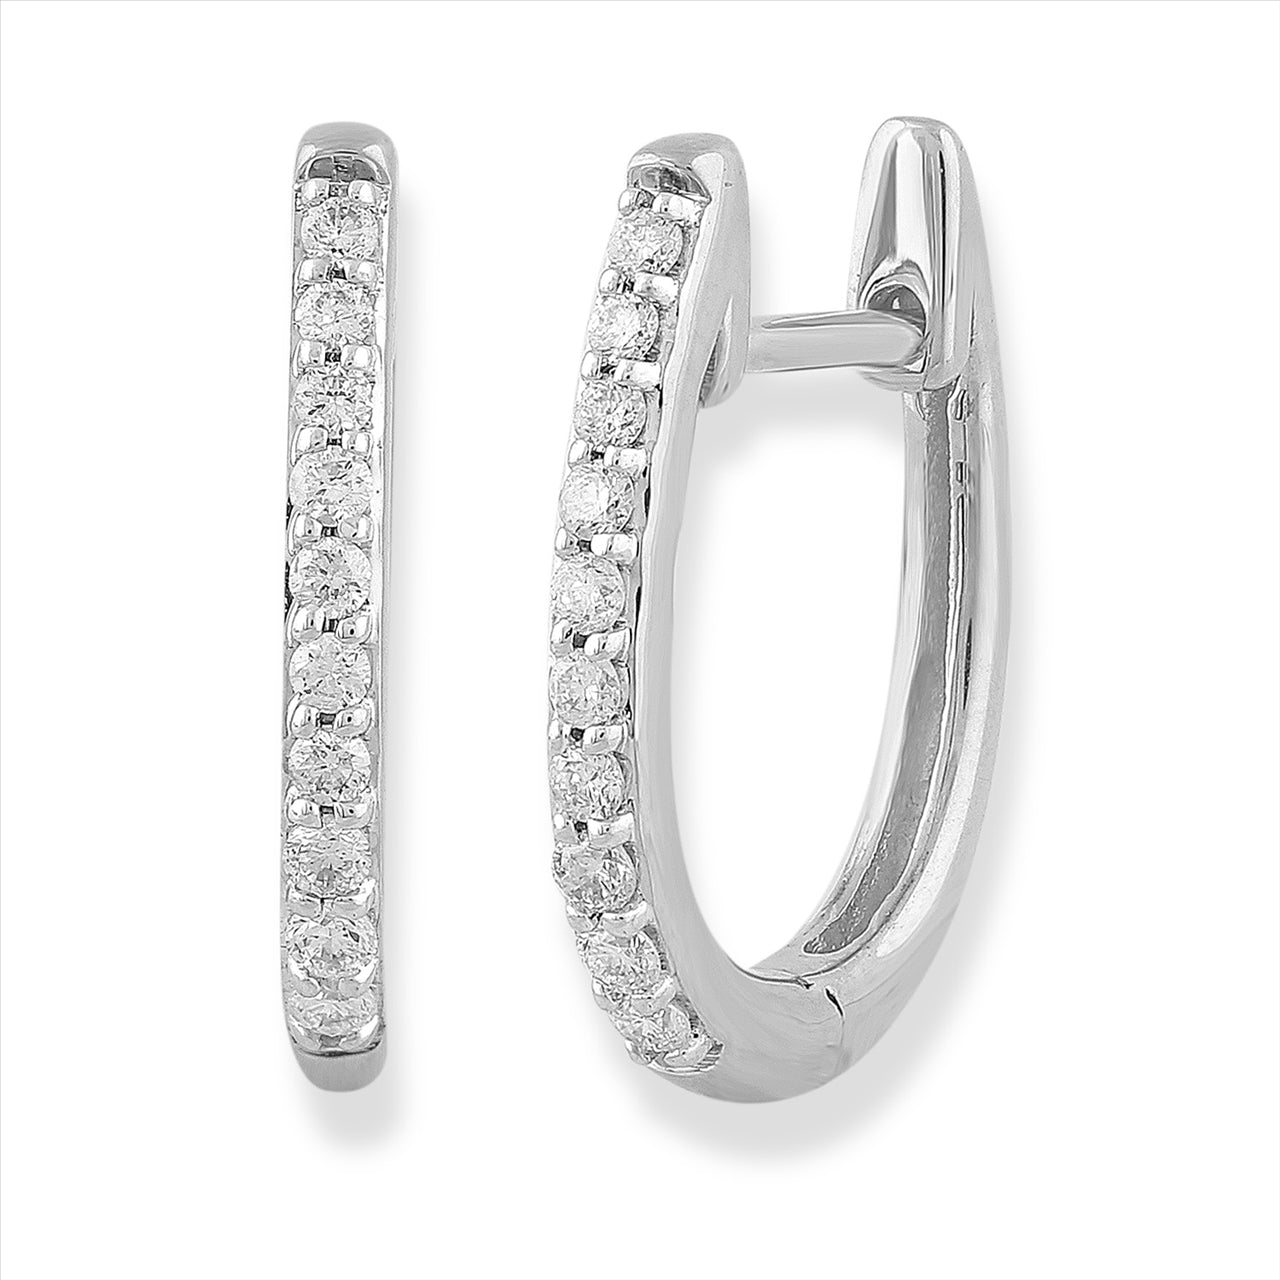 9ct White Gold Diamond Huggie Earrings